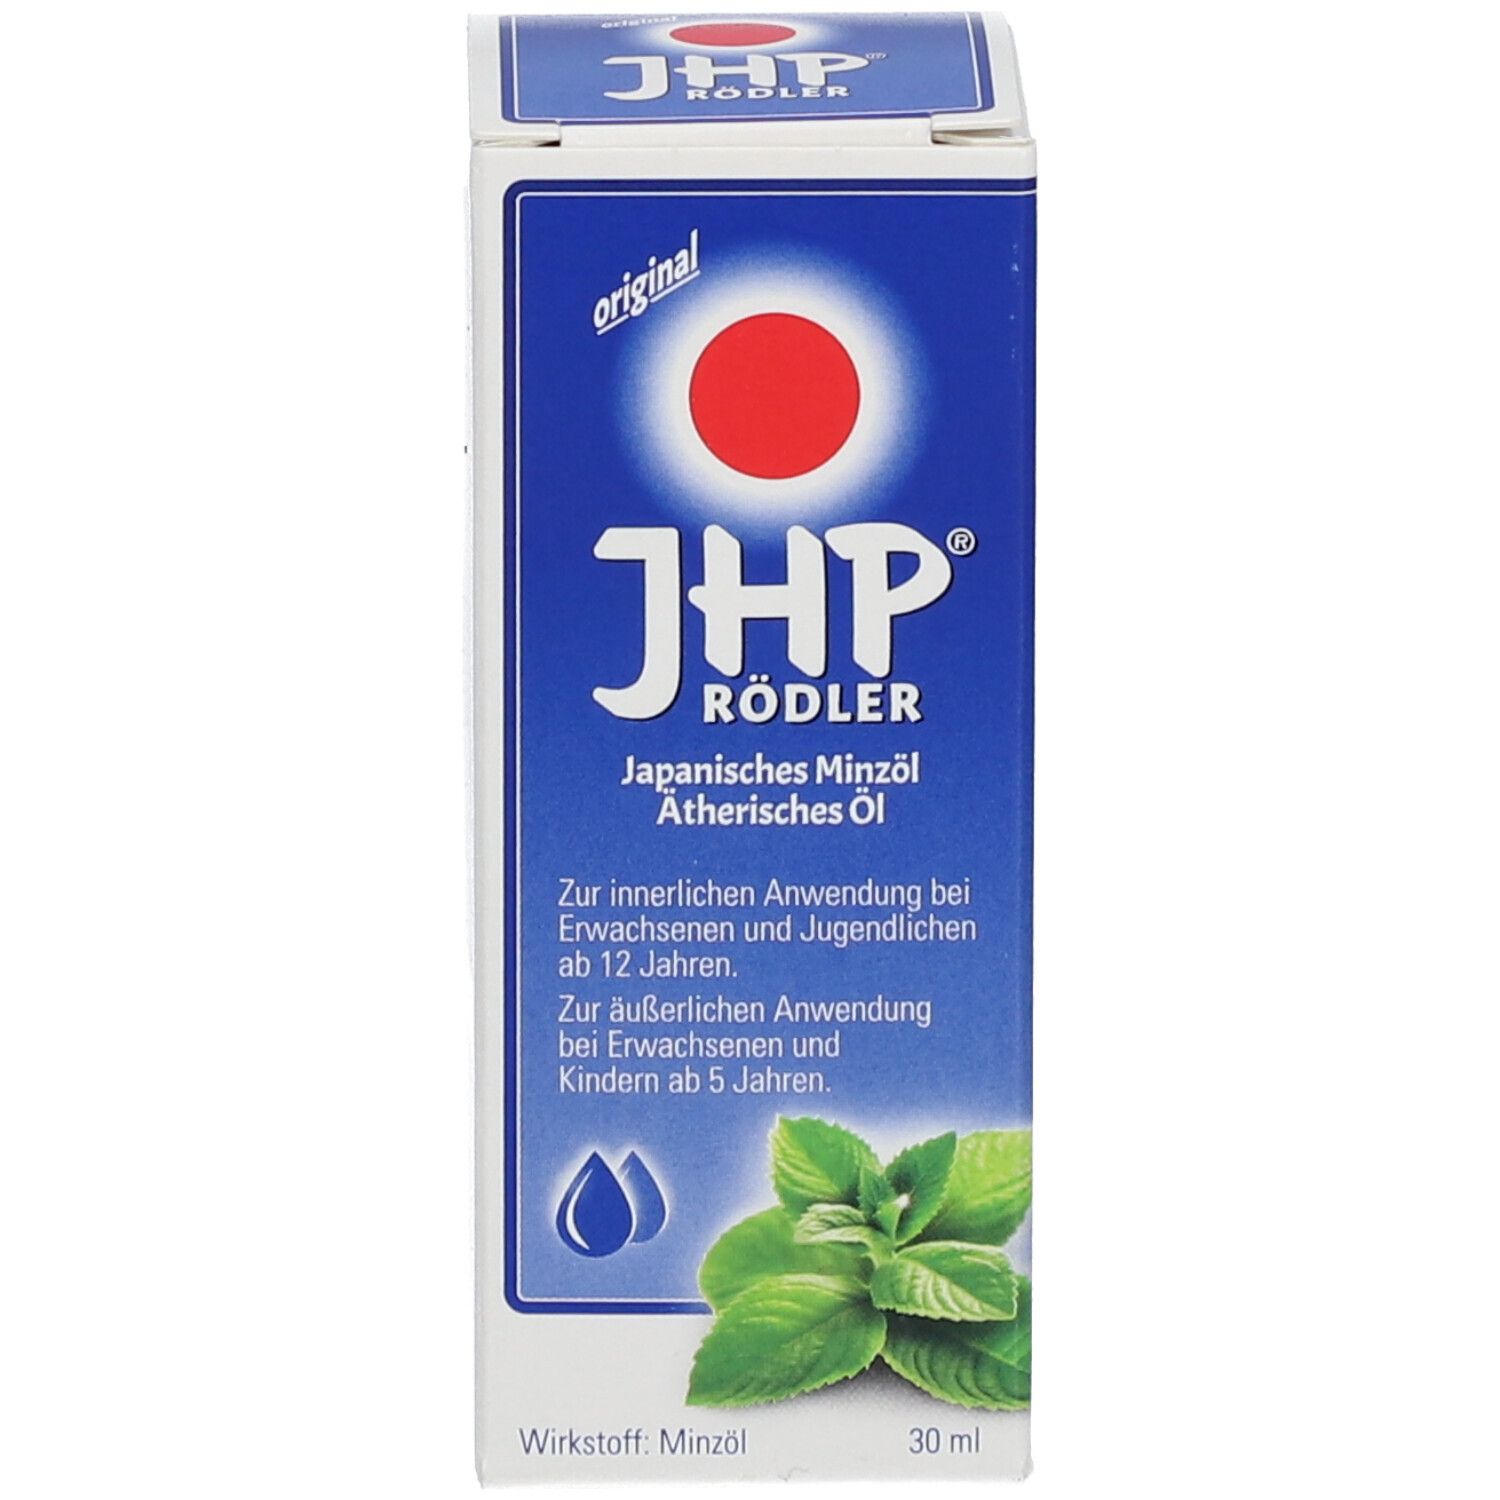 JHP® Rödler Japanisches Minzöl ätherisches Öl